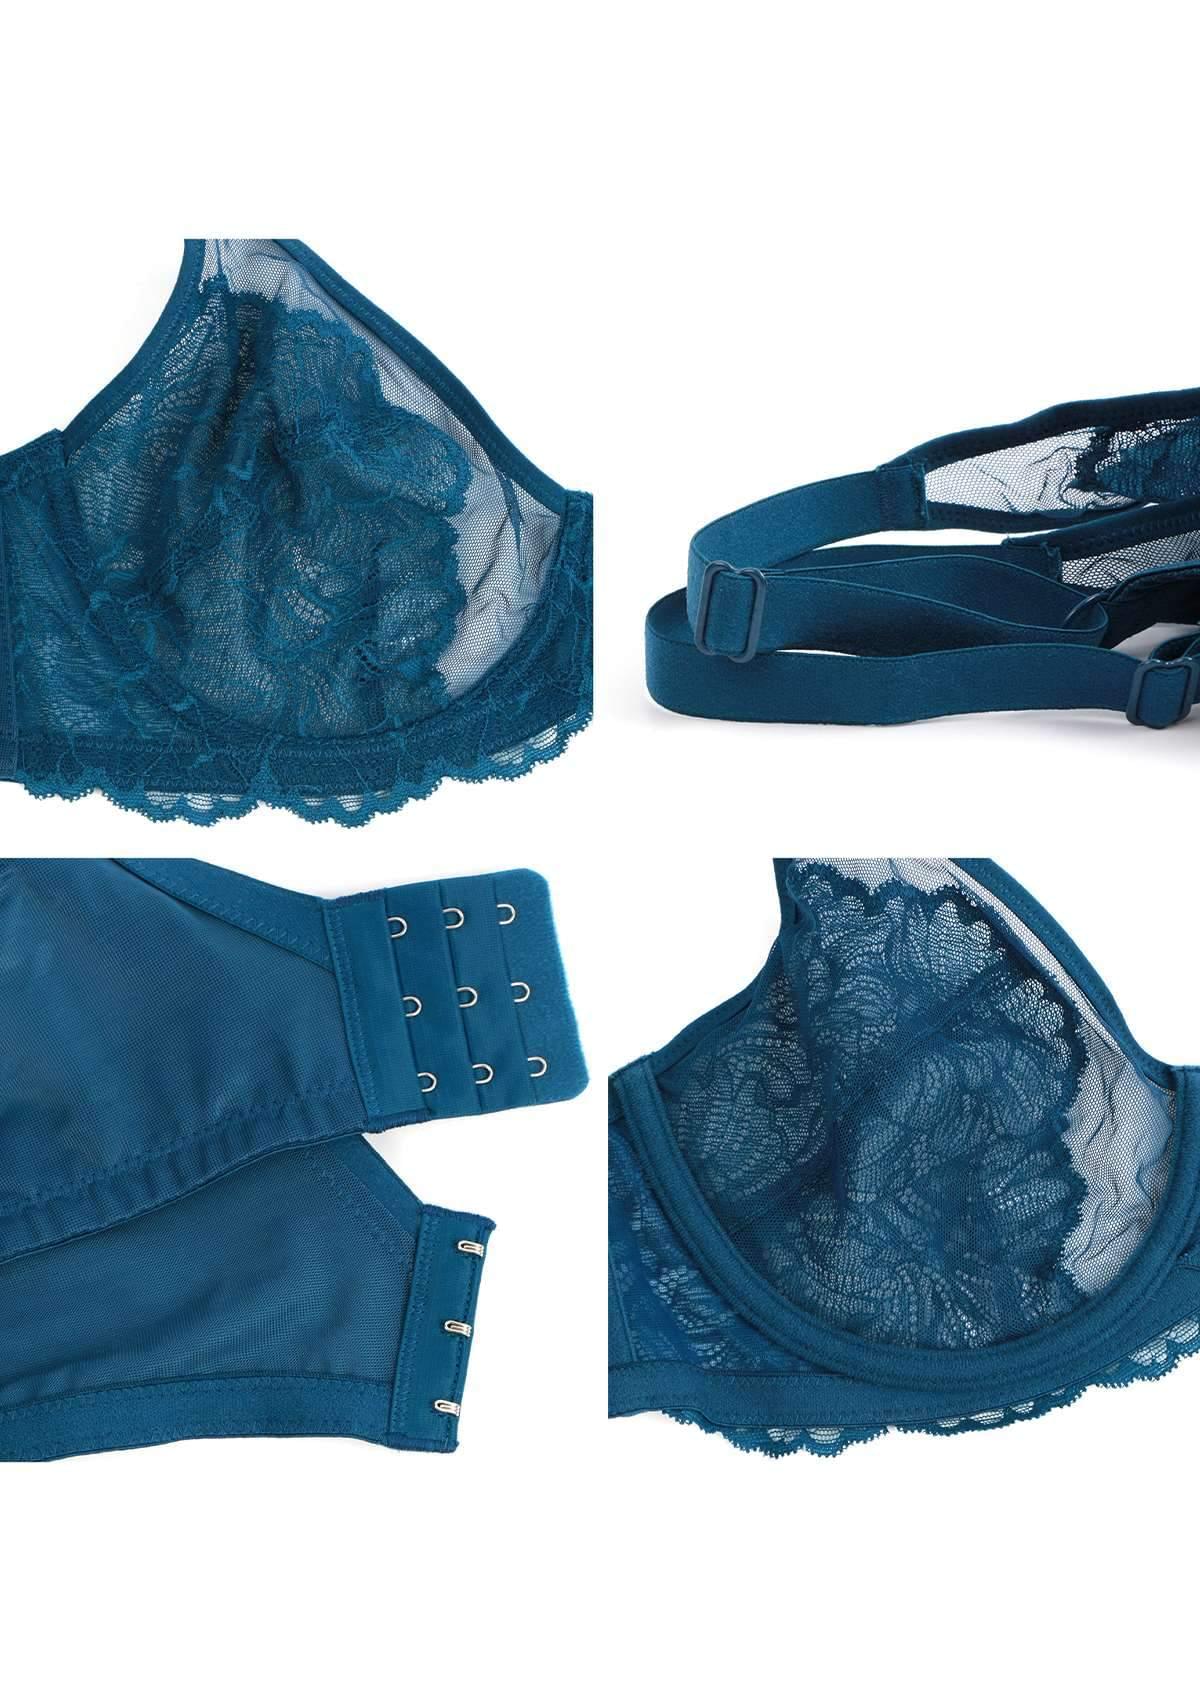 HSIA Blossom Lace Bra And Underwear Sets: Comfortable Plus Size Bra - Biscay Blue / 38 / DDD/F